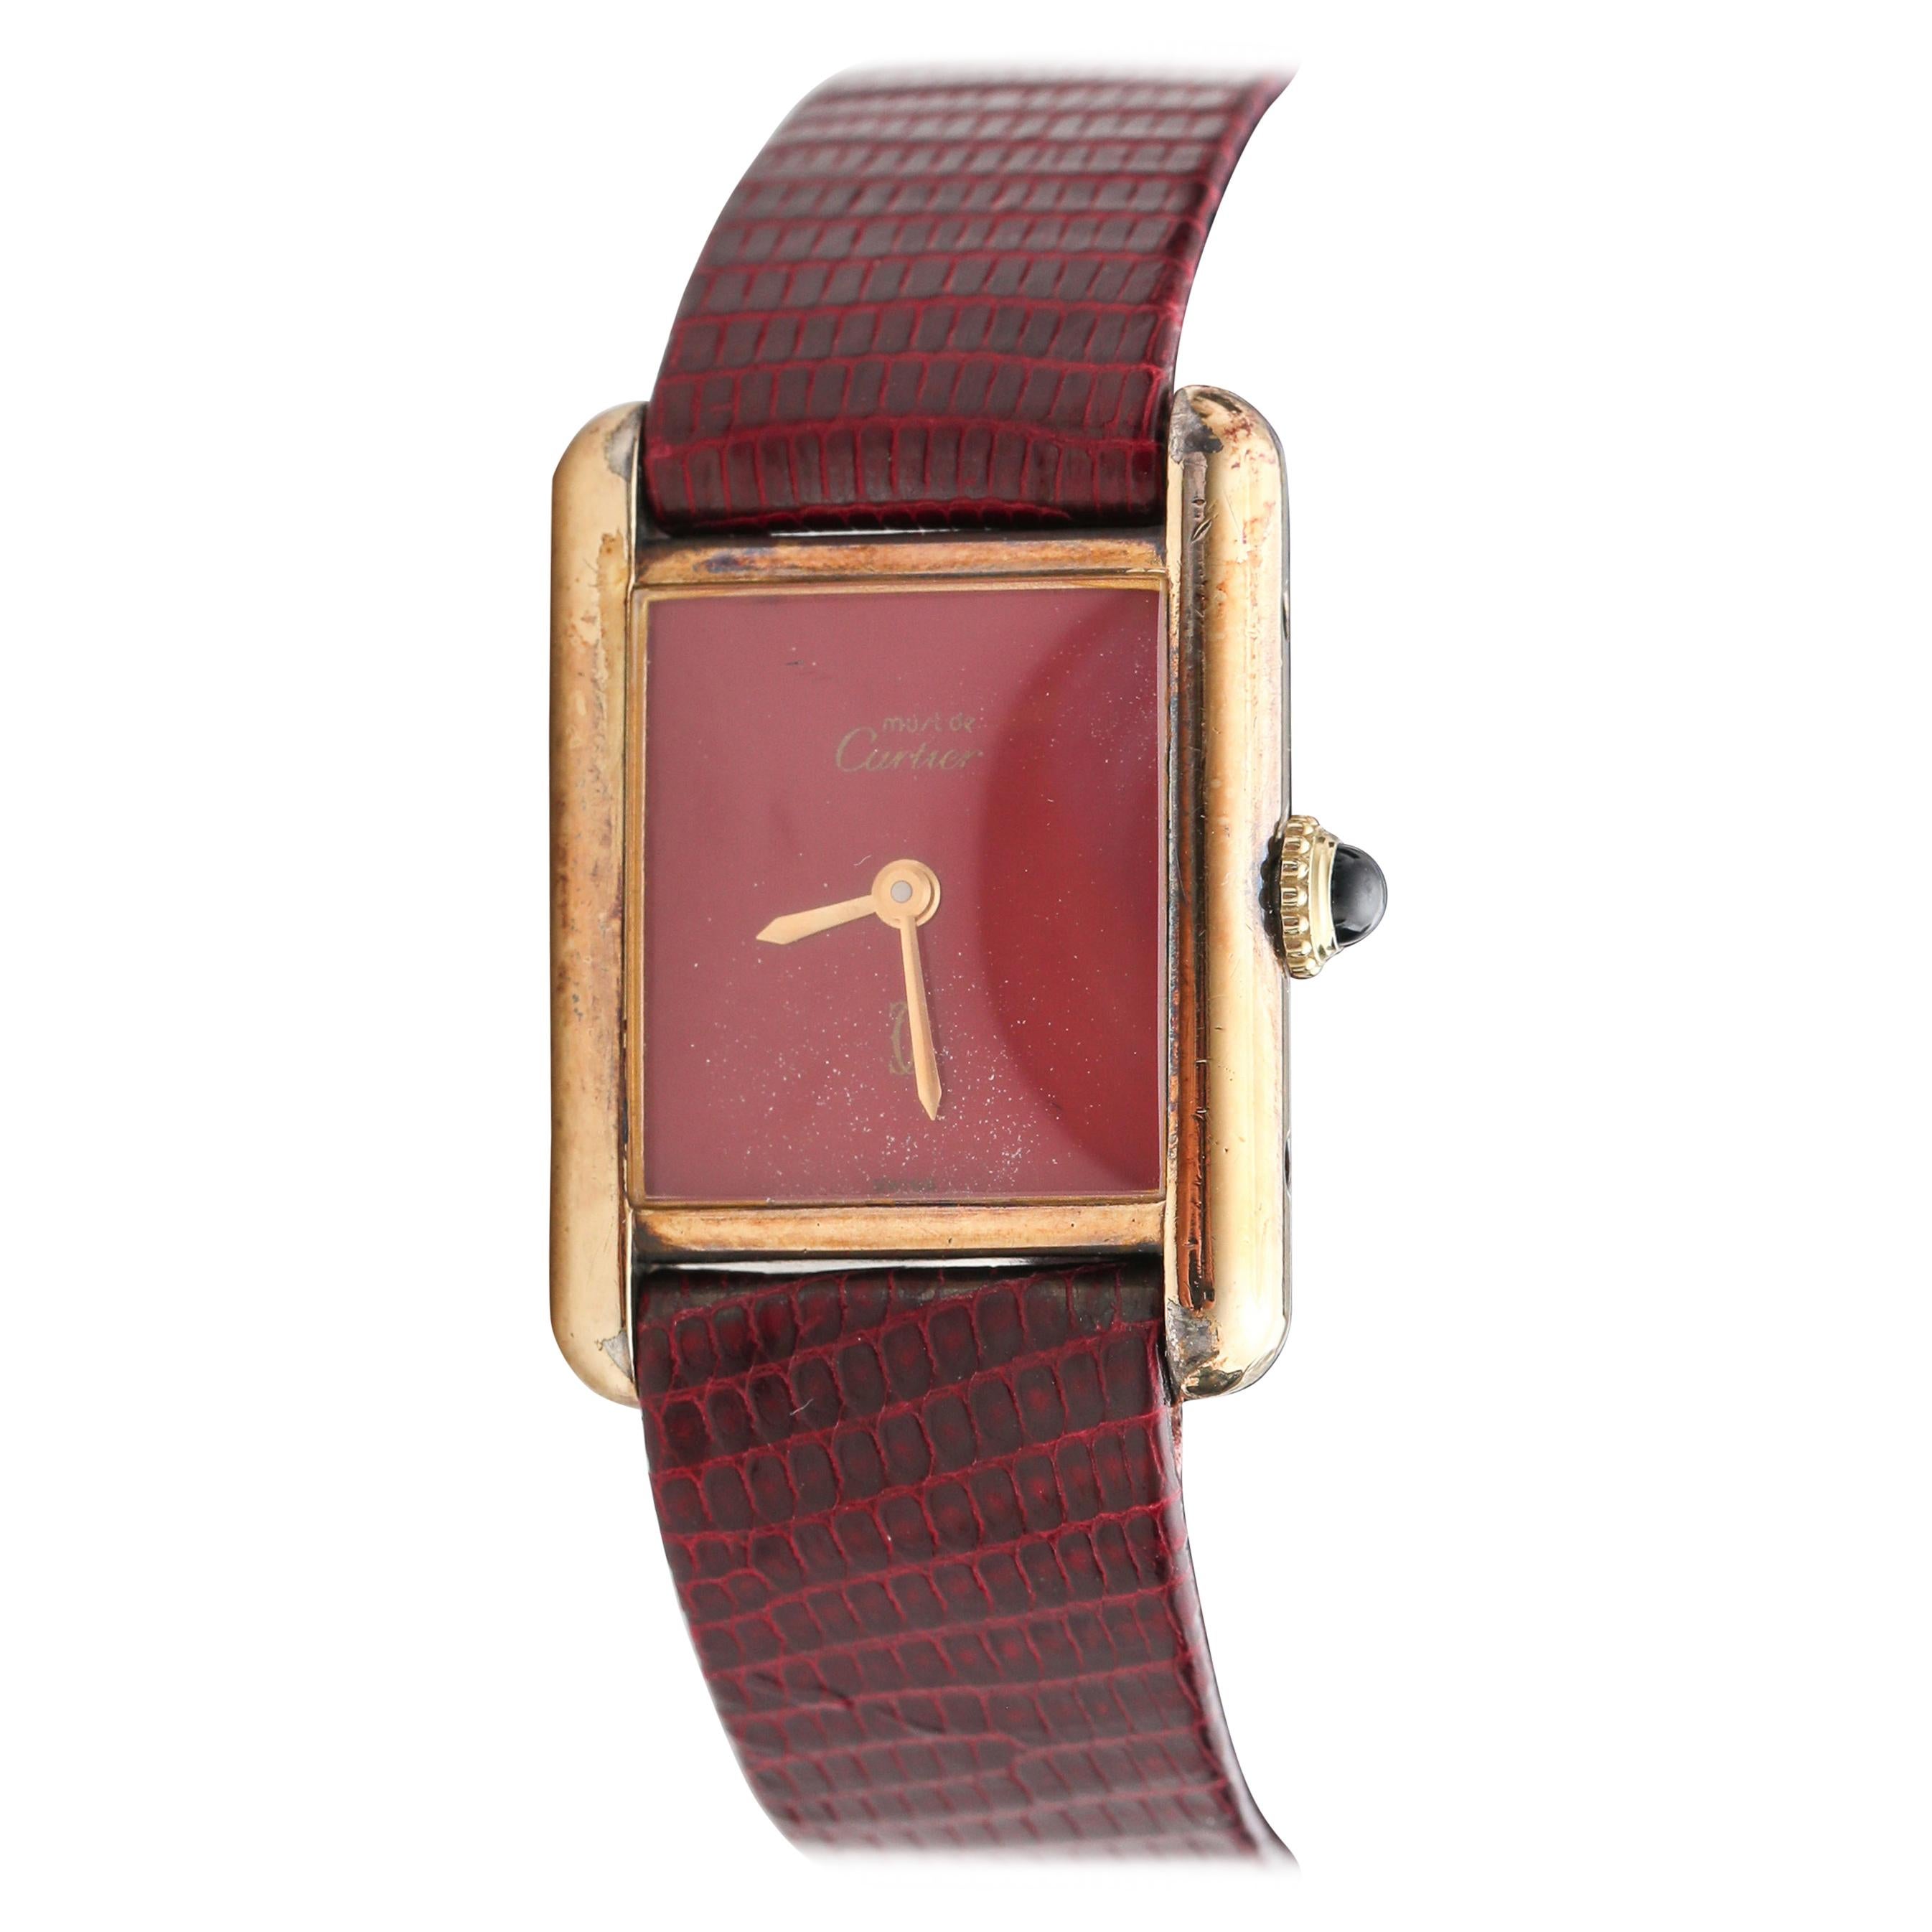 1970s Cartier Tank Vermeil Wristwatch with Maroon Dial